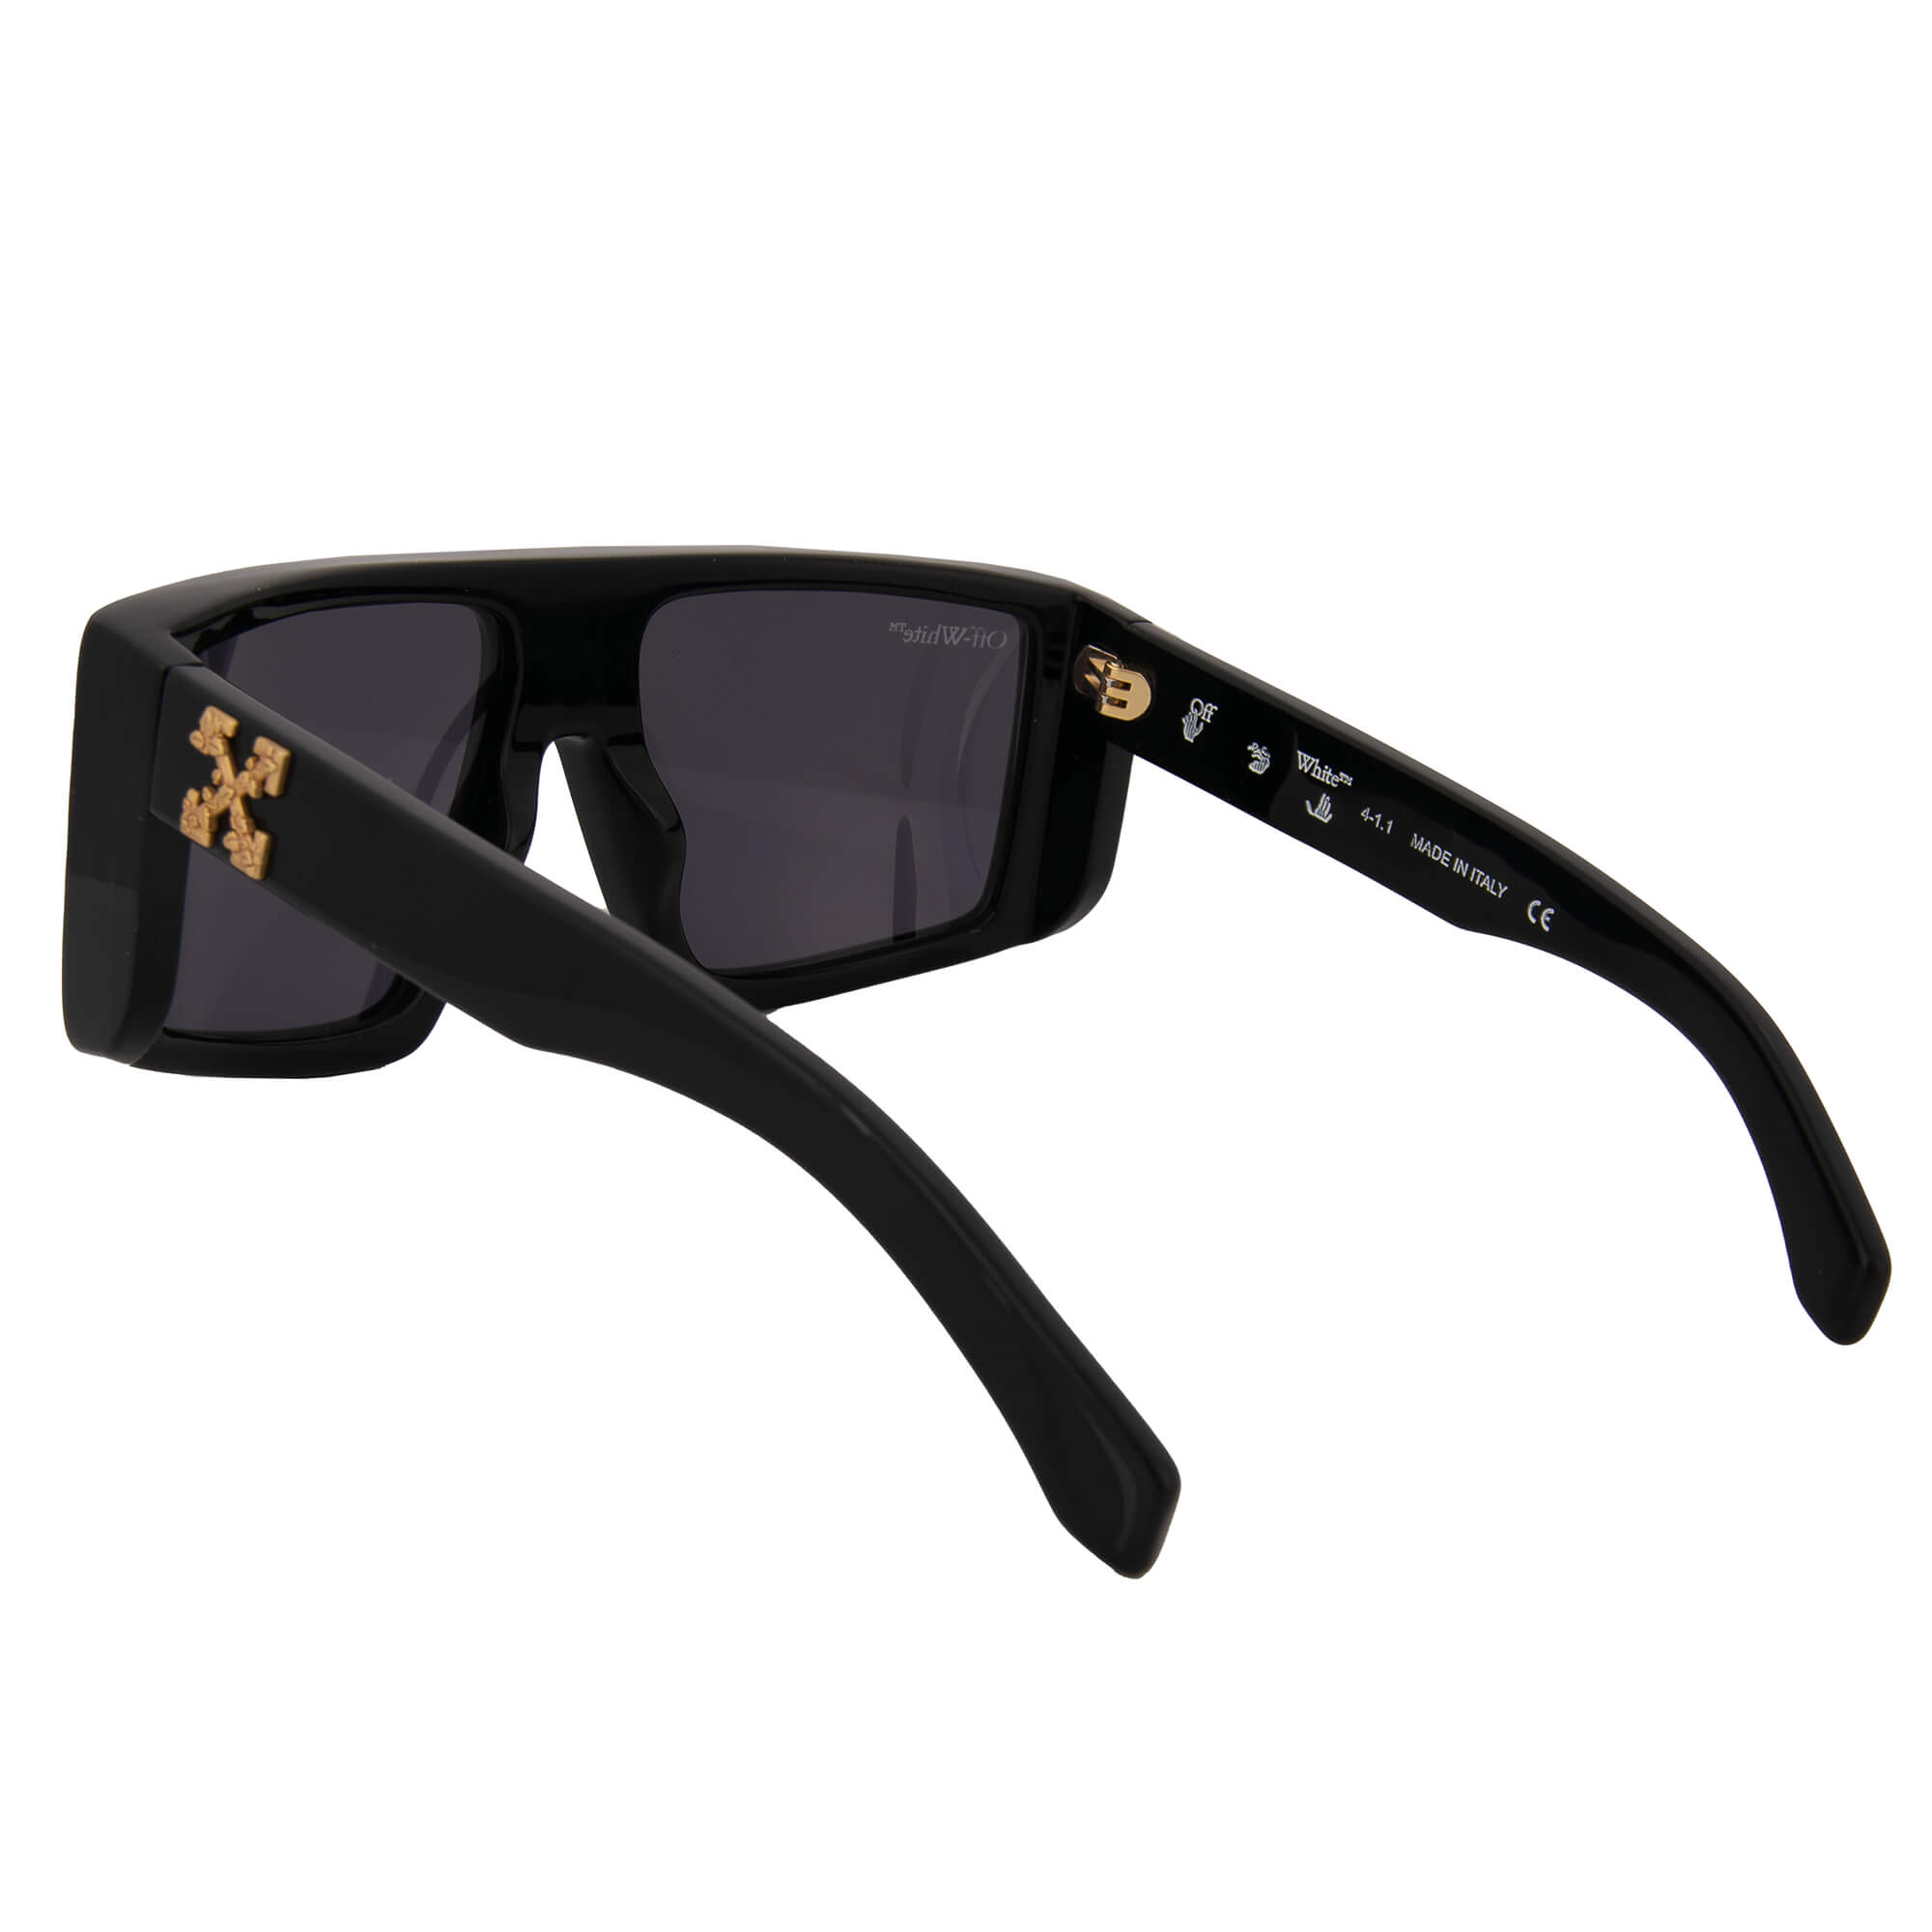 Off-White Alps Sunglasses